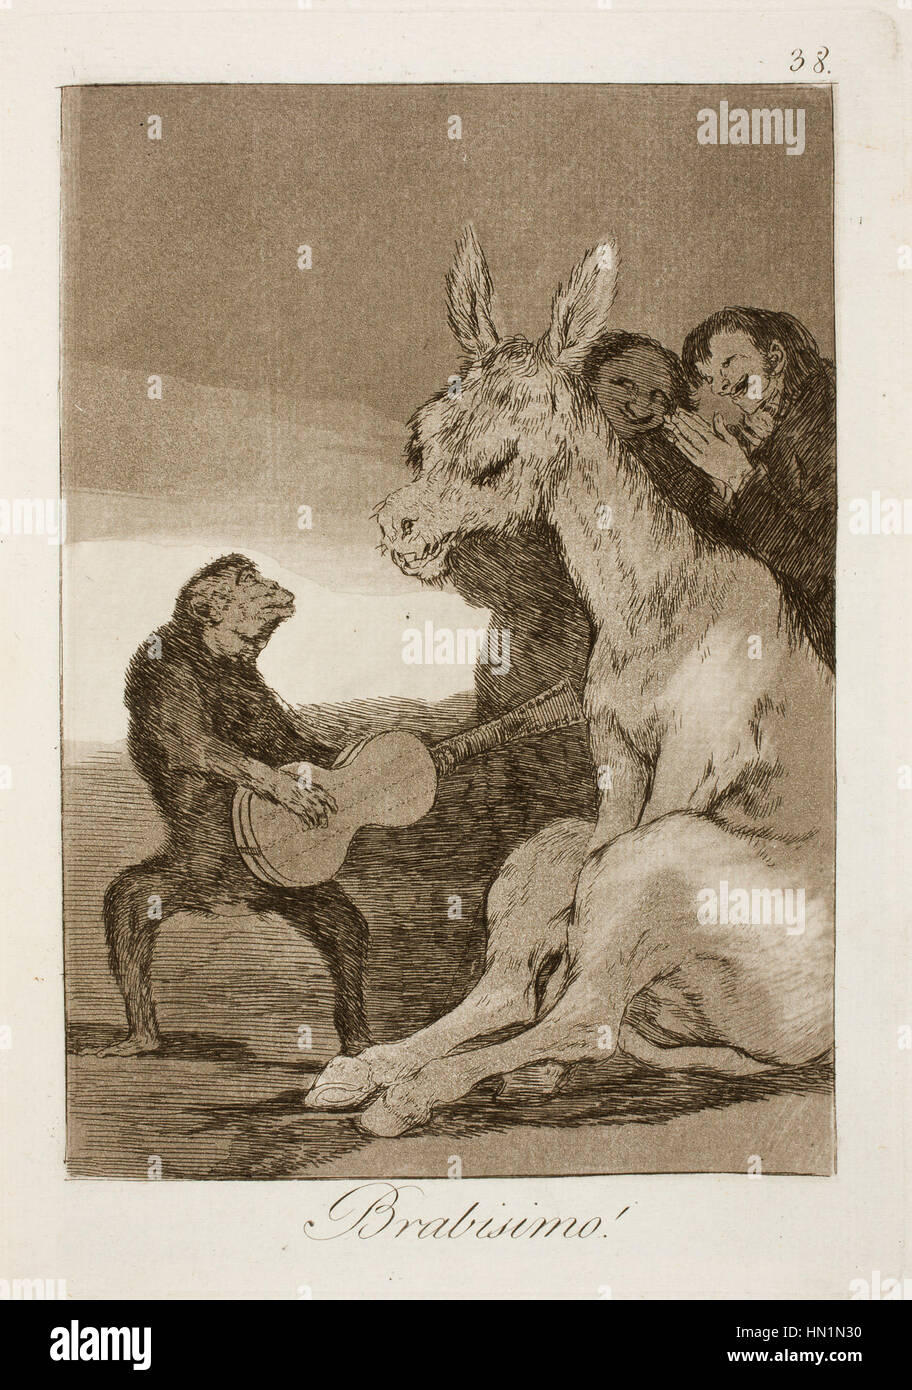 Museo del Prado - Goya - Caprichos - No. 38 - Brabisimo! Stock Photo